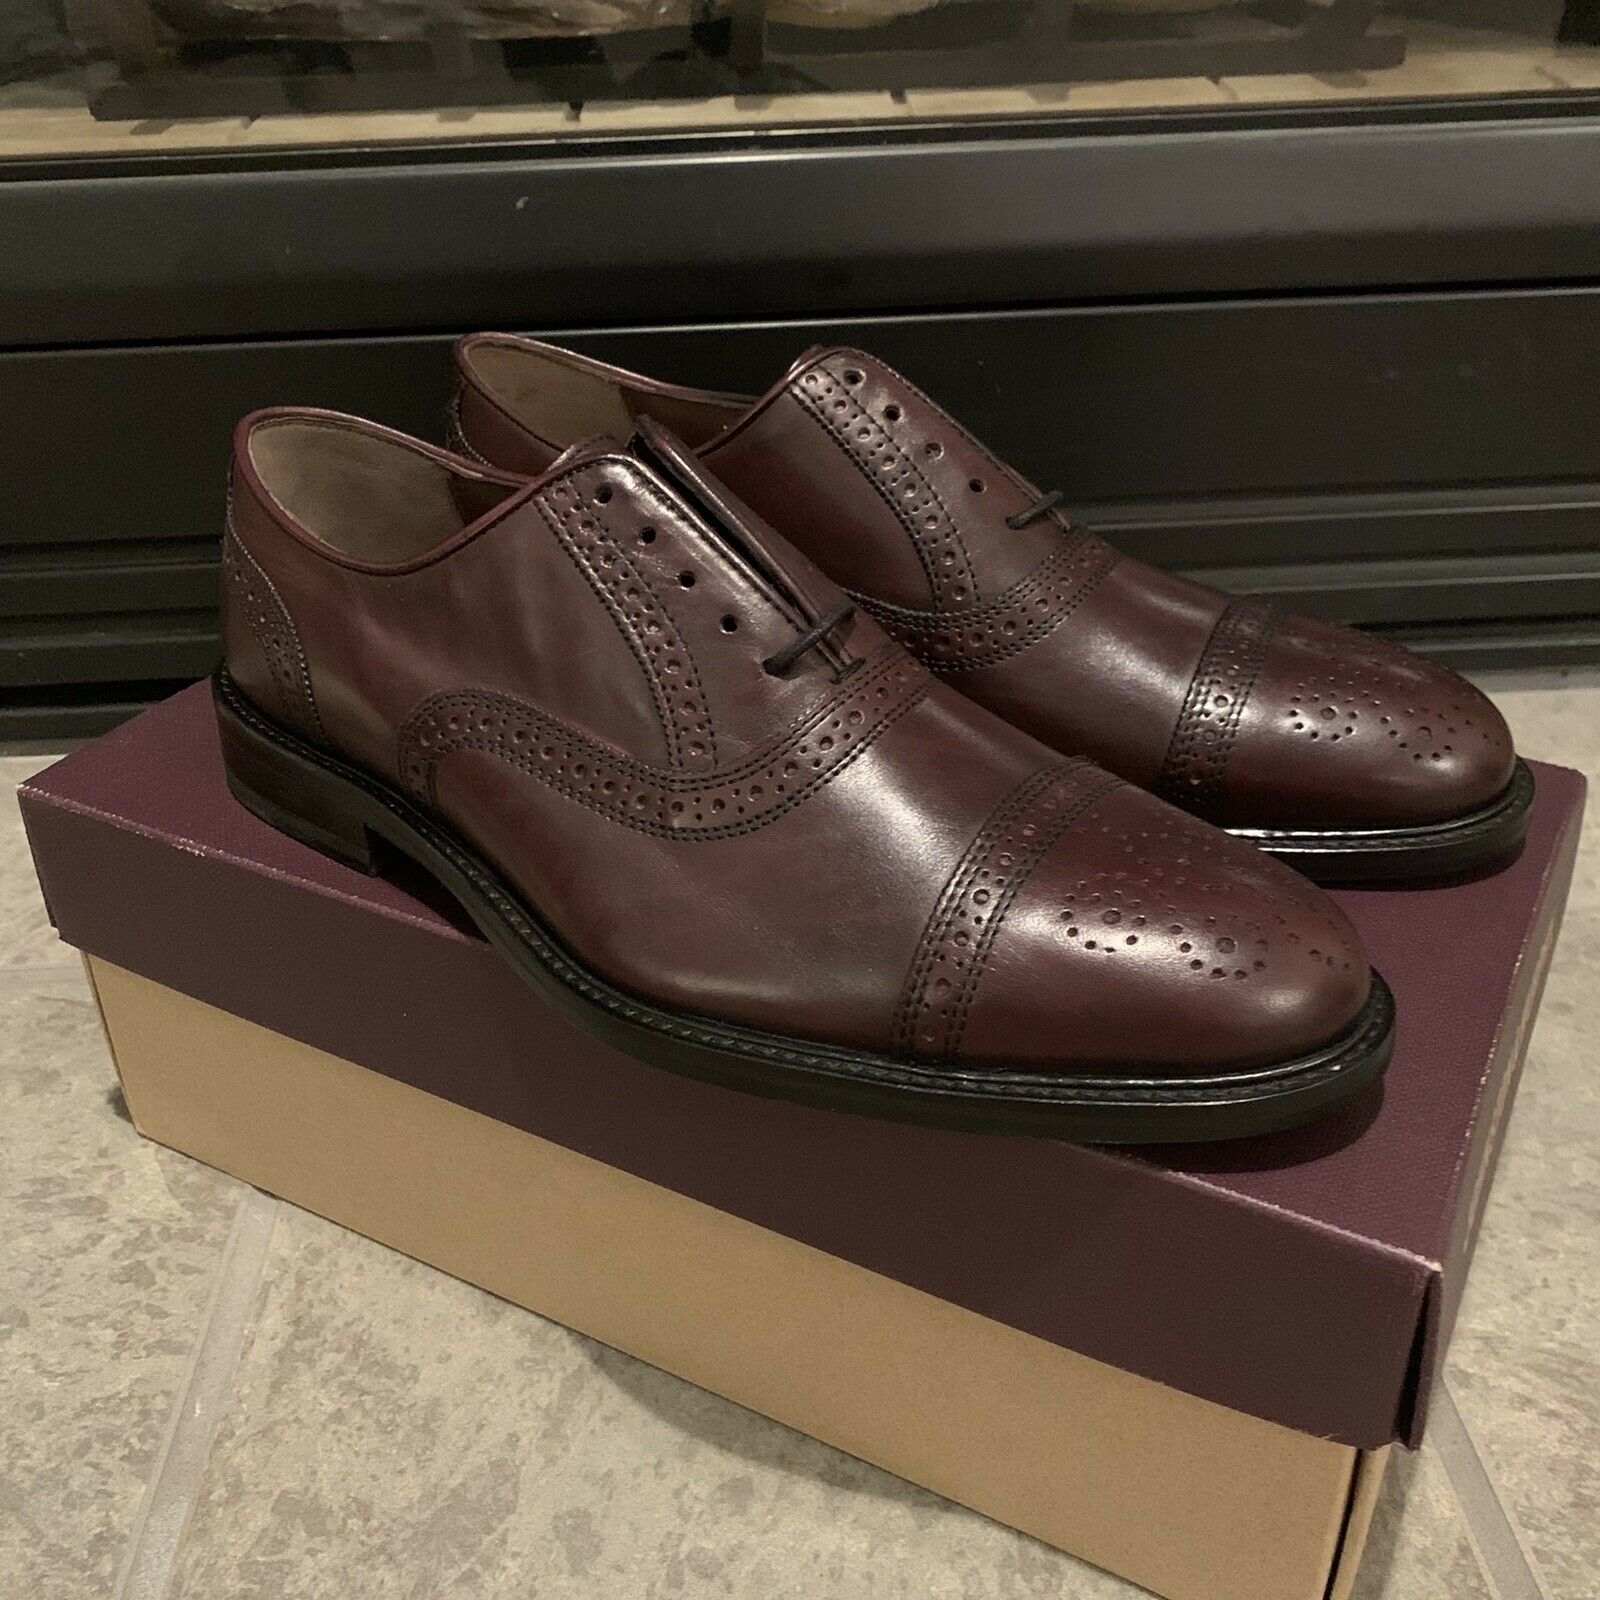 Johnston & Murphy Mens 8.5 US Daley Cap Toe Leather Dress Shoes Oxfords Burgundy